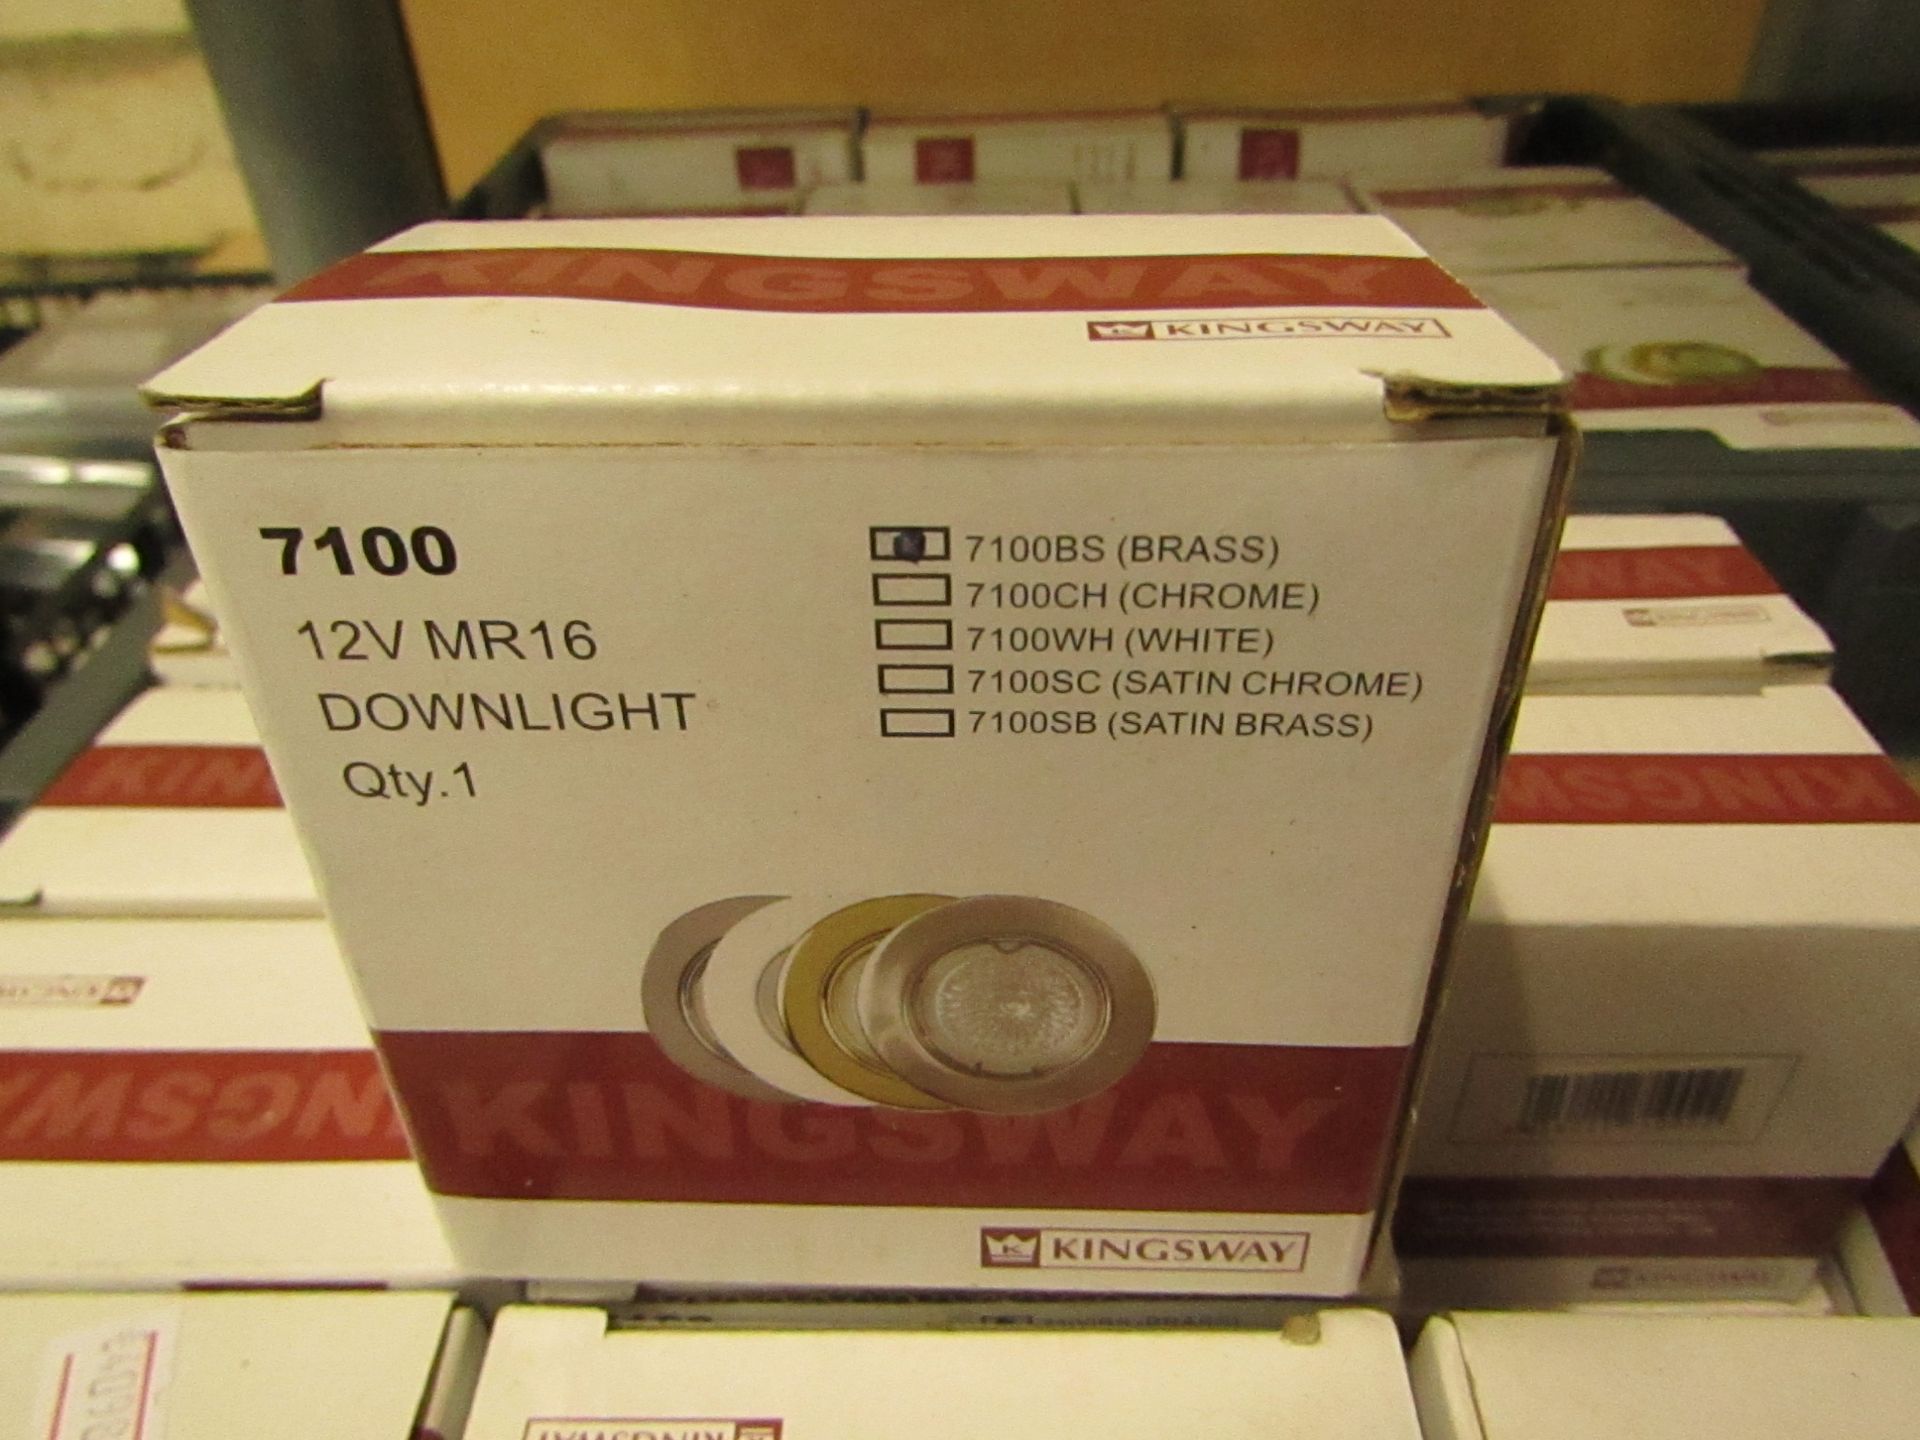 8 x 12v MR16 Downlights in Brass. Boxed